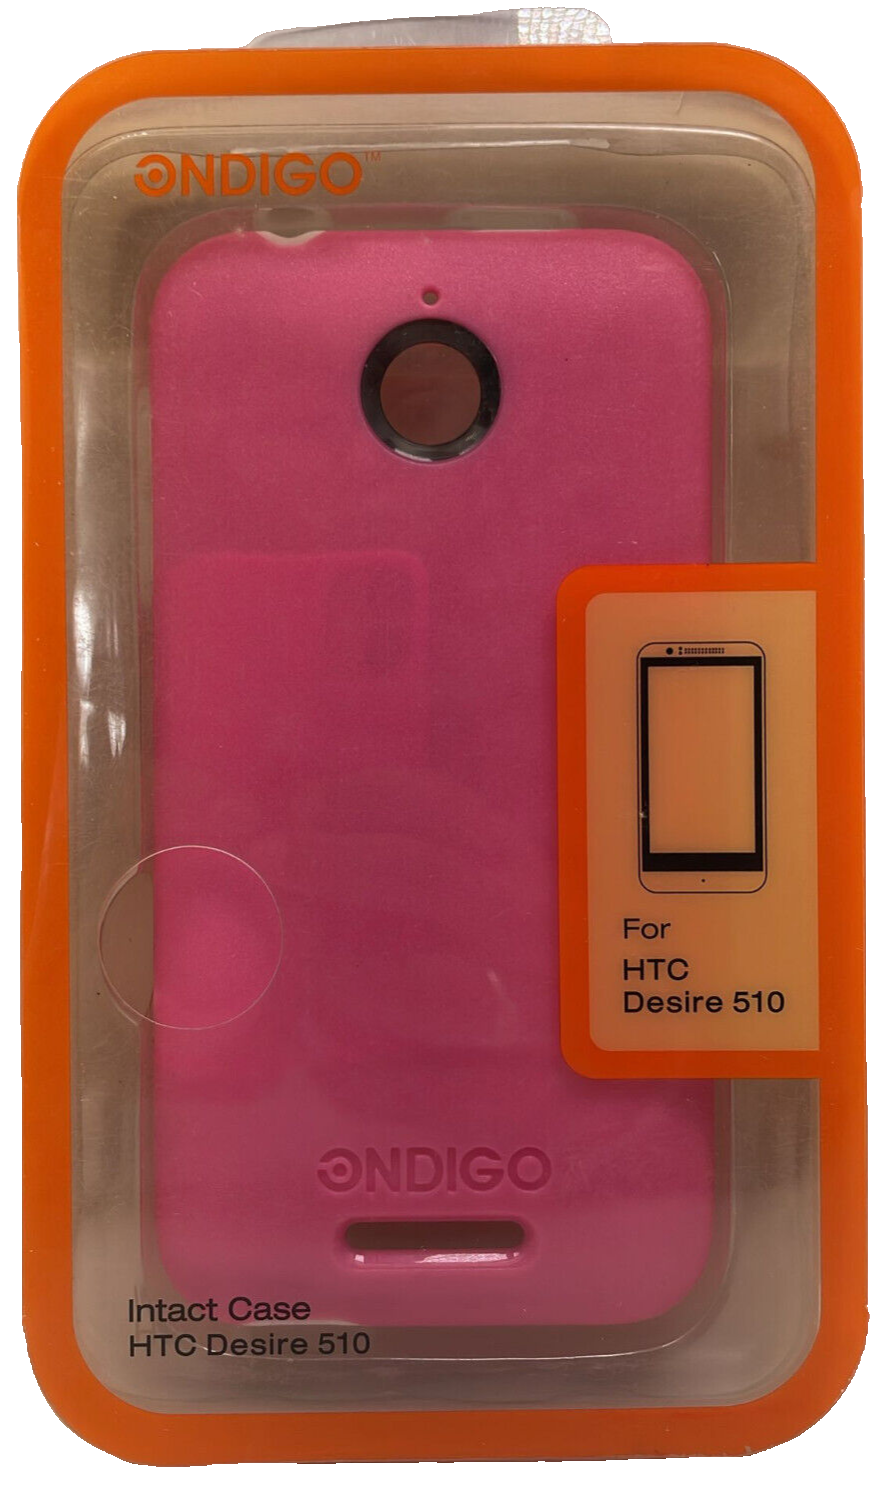 ONDIGO Intact Hard Case for HTC Desire 510 - Pink/White ONDIGO D510-PNKWHT